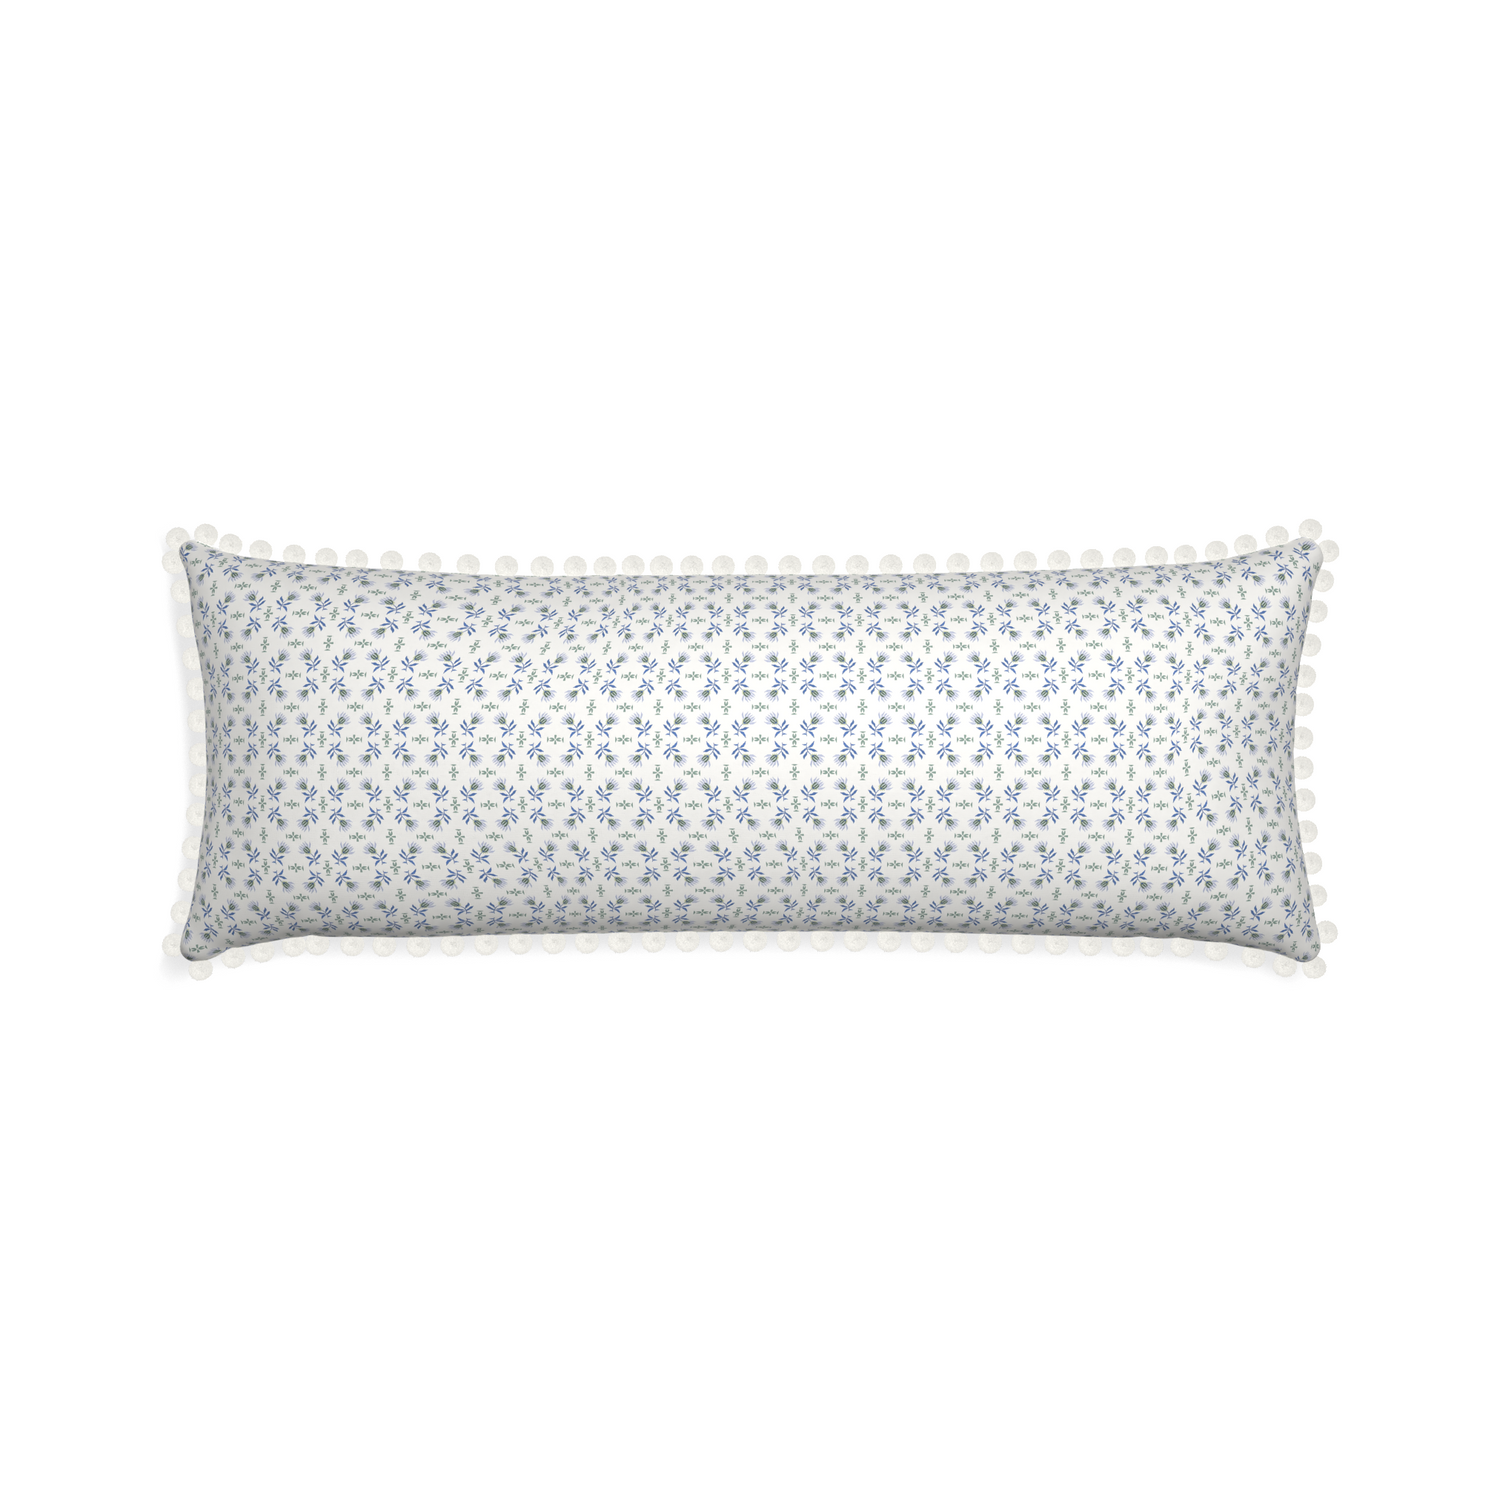 Xl-lumbar lee custom pillow with snow pom pom on white background